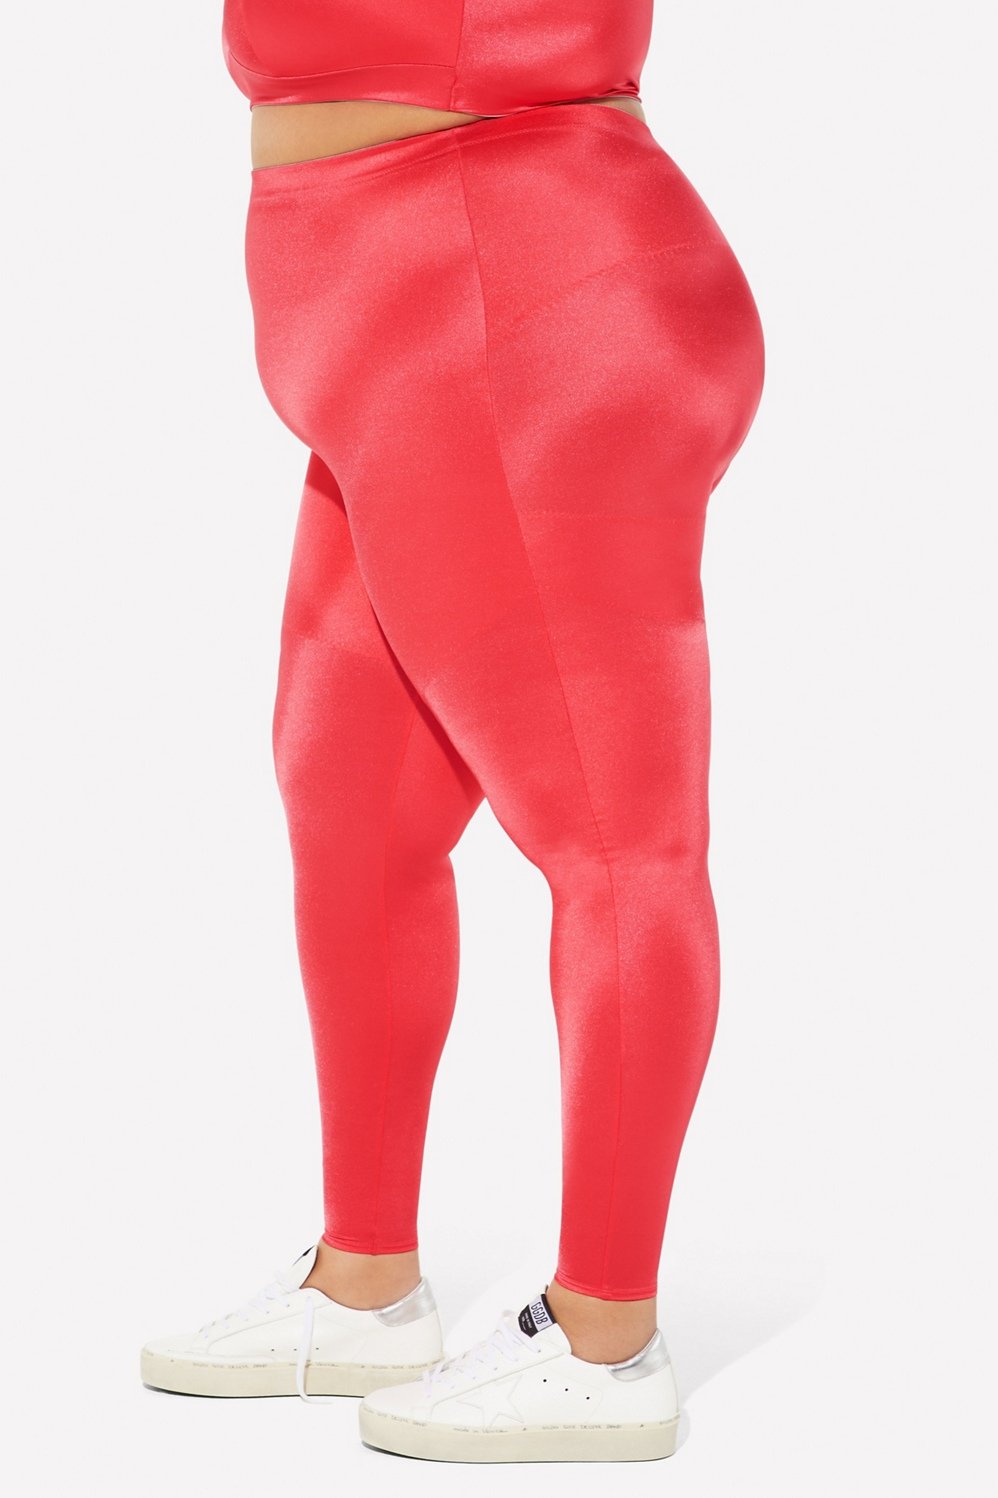 YELETE Legwear High Waist Compression Leggings, Plus Size, Wine Red